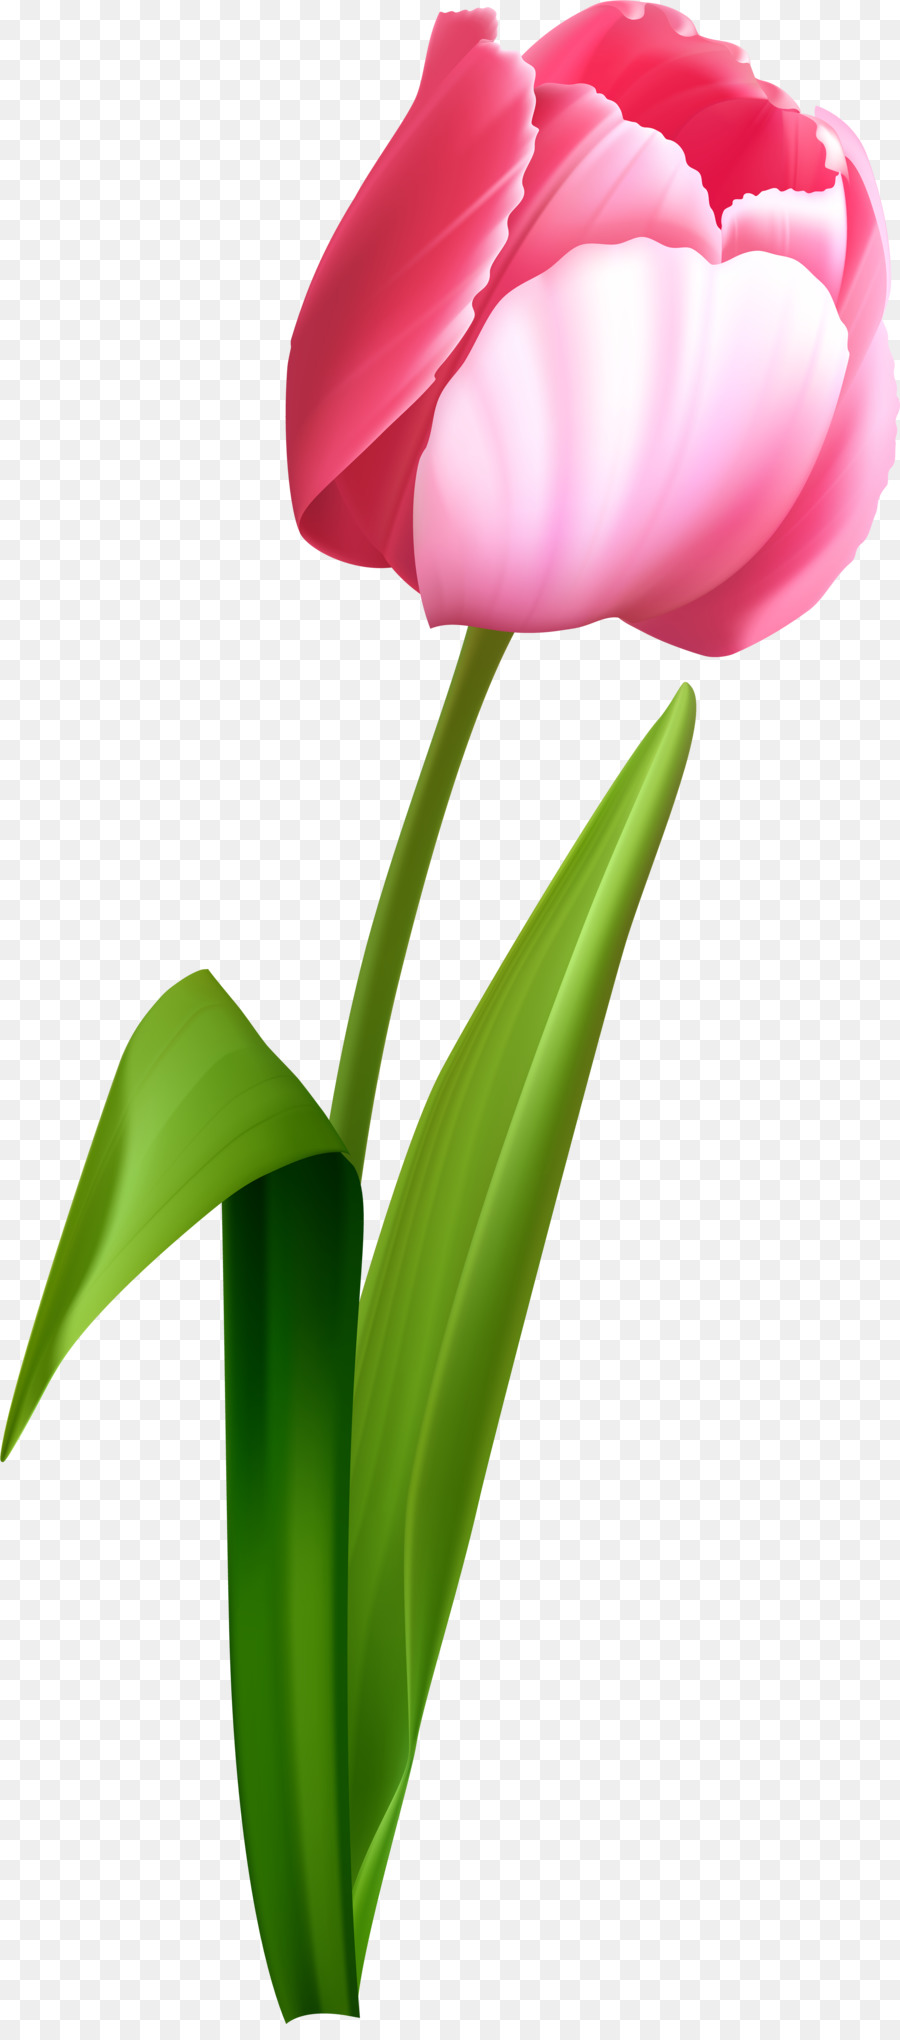 Tulip Portable Network Graphics Clip art Transparency Desktop Wallpaper - spring clip art png tulips png download - 3507*7888 - Free Transparent Tulip png Download.